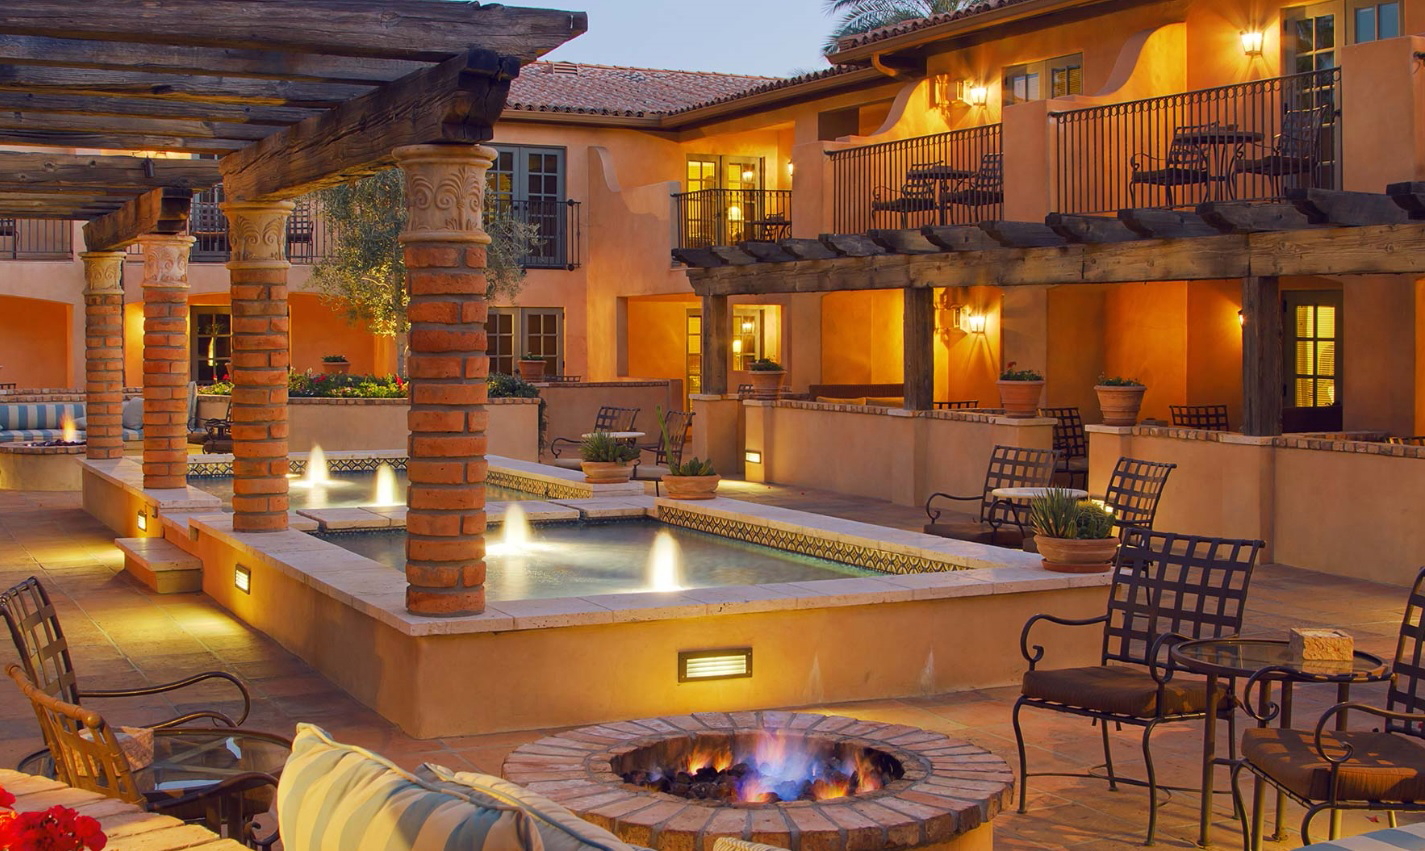 Royal Palms Resort & Spa is one of the very best hotels in Phoeniz, Arizona